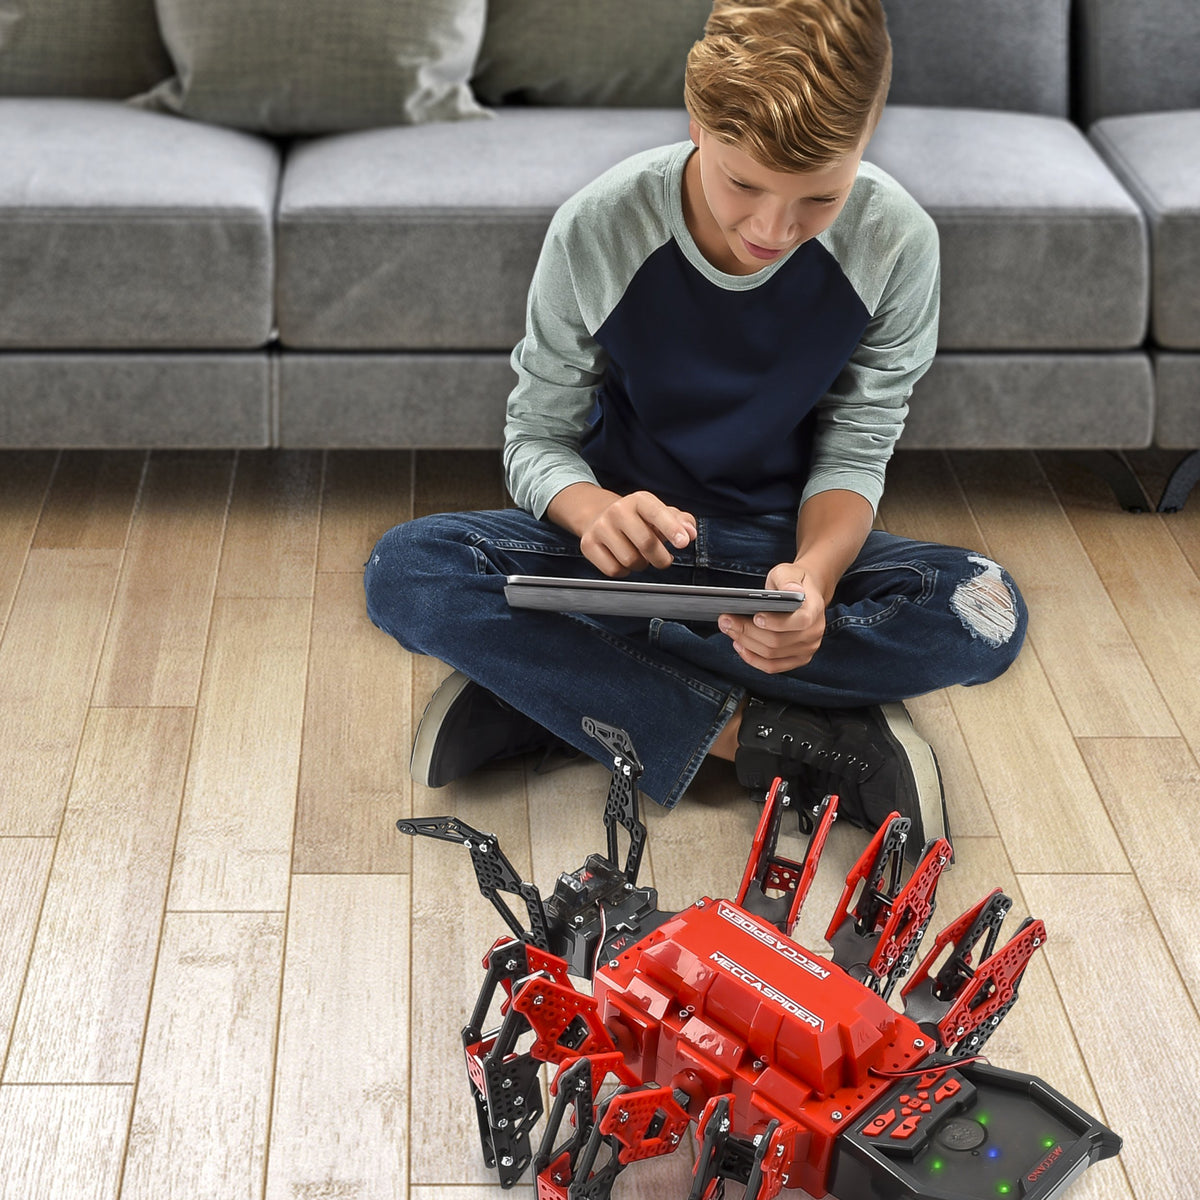 Meccano-Erector – MeccaSpider Robot Kit for Kids to Build, STEM